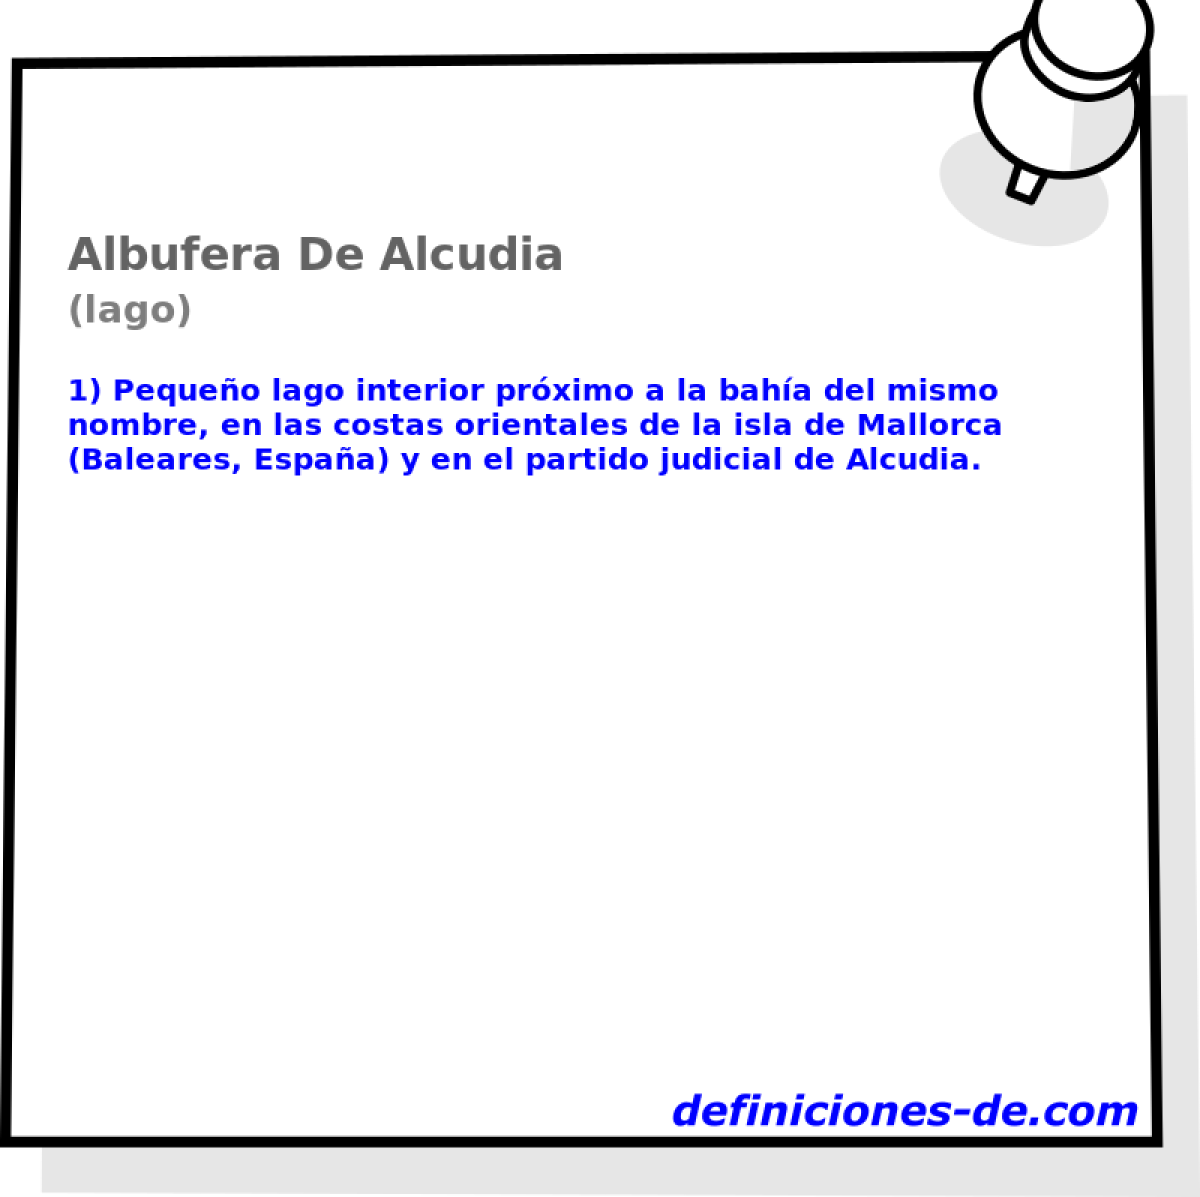 Albufera De Alcudia (lago)